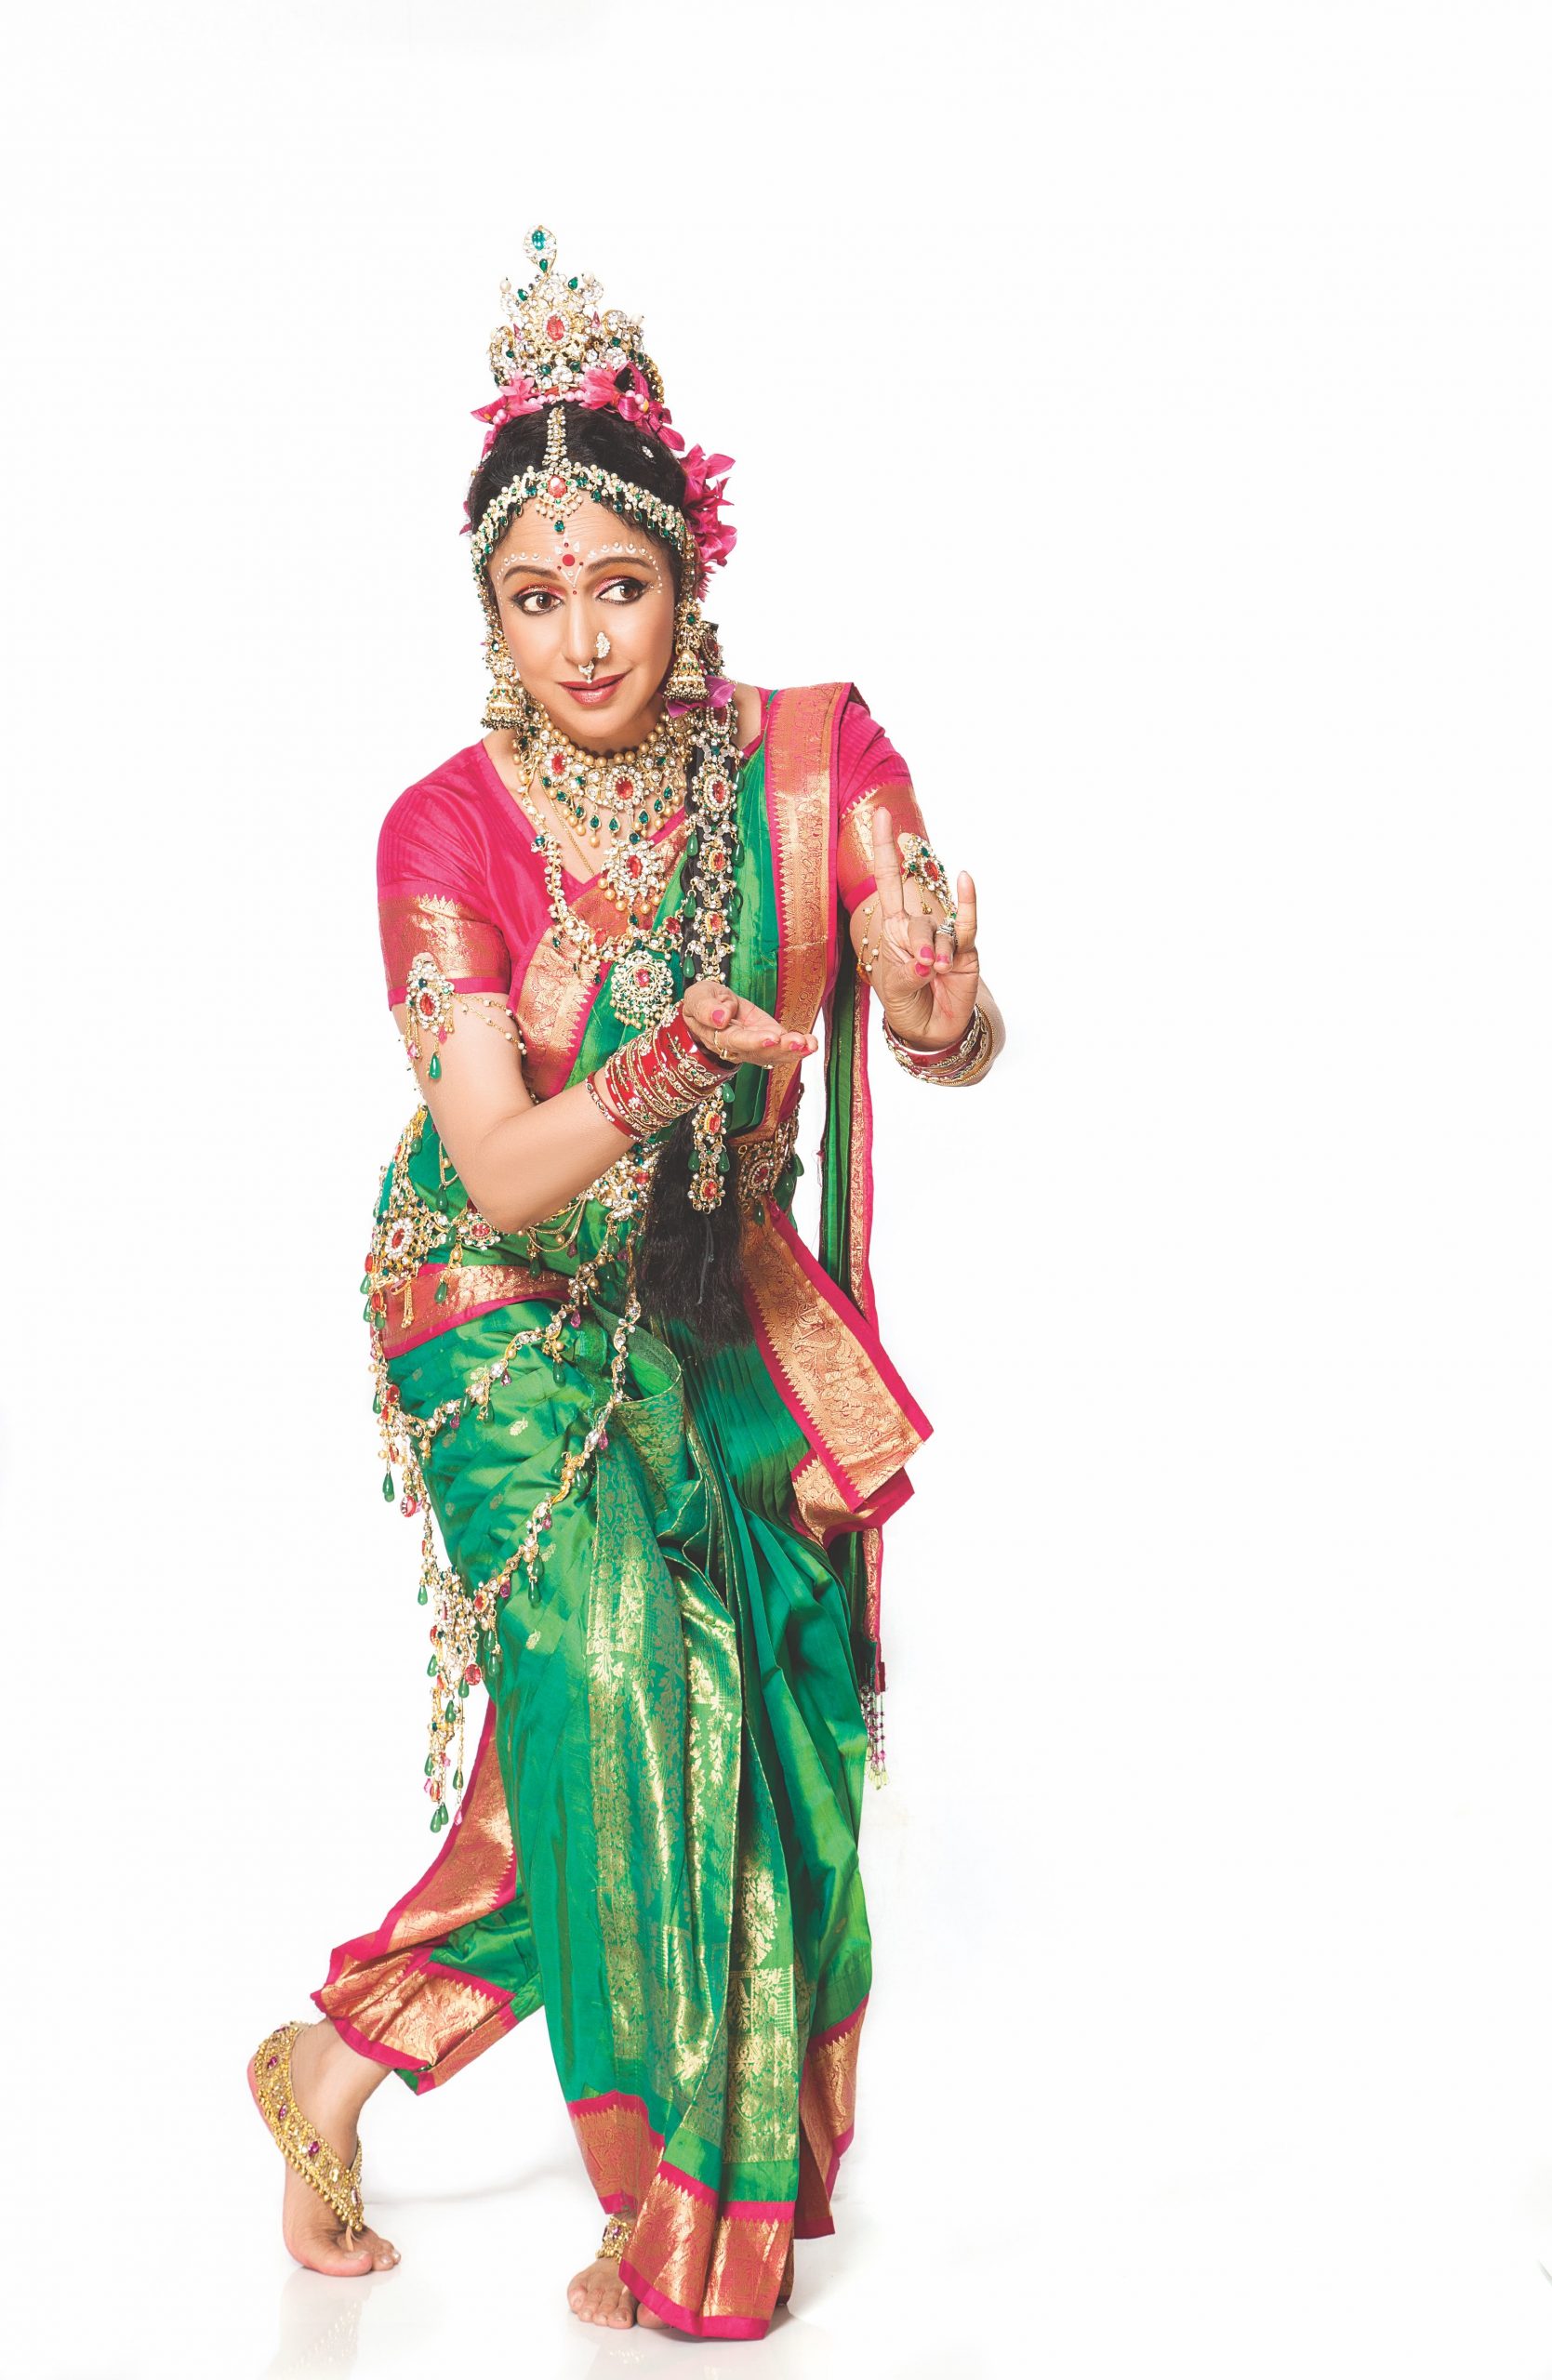 Hema Malini Xxxsex - Hema Malini as Radha - Day 2053 - Bhawana Somaaya